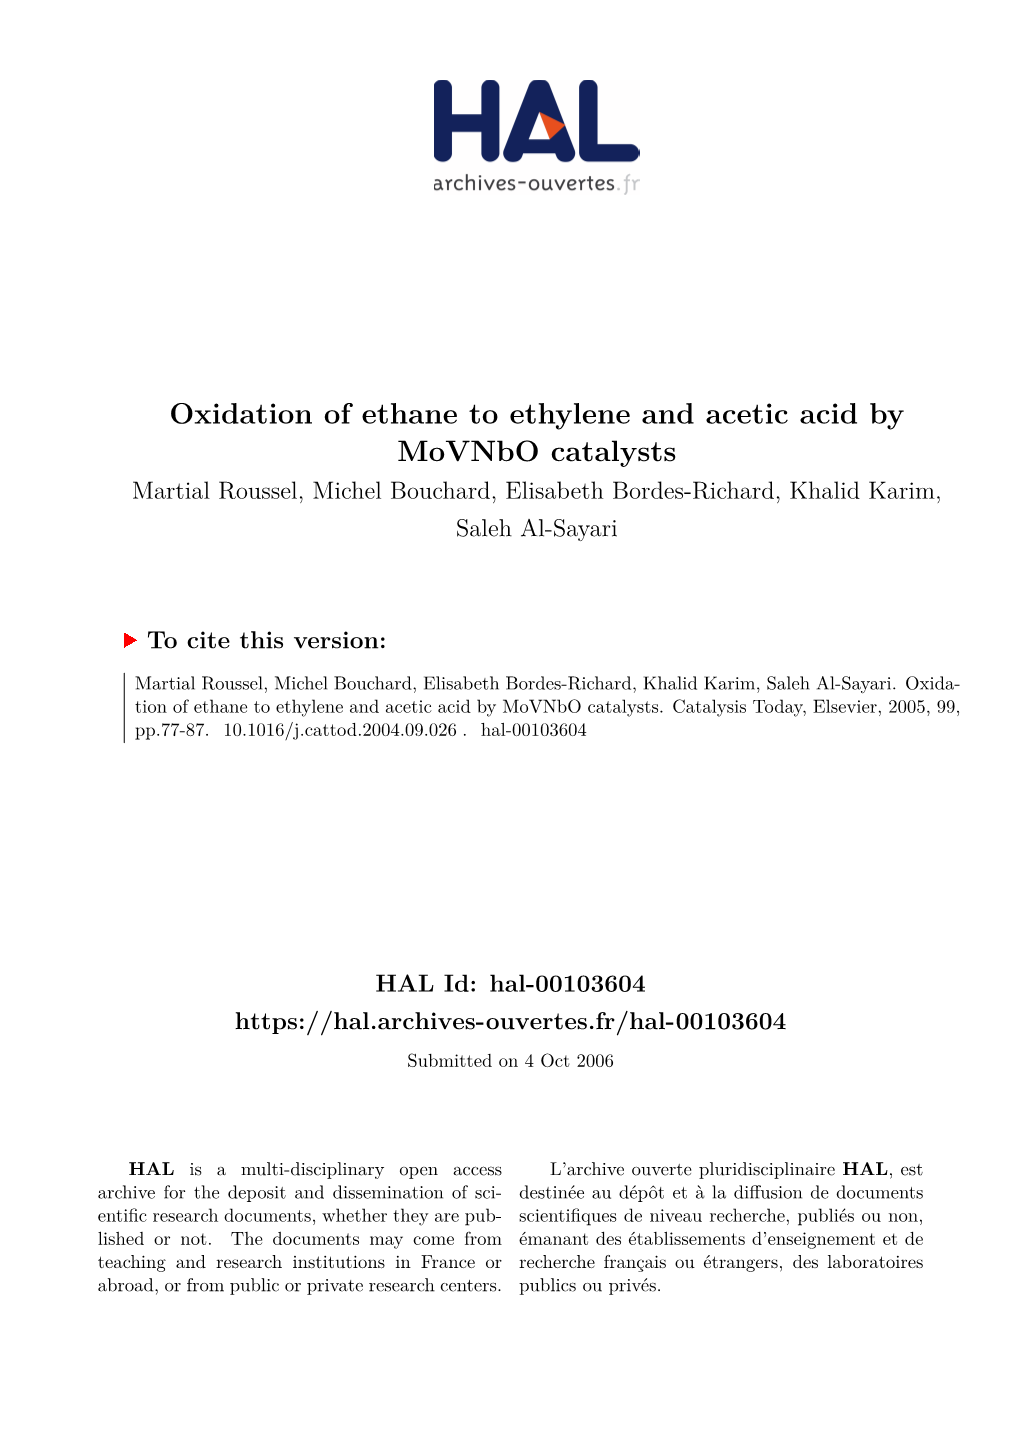 Oxidation of Ethane to Ethylene and Acetic Acid by Movnbo Catalysts Martial Roussel, Michel Bouchard, Elisabeth Bordes-Richard, Khalid Karim, Saleh Al-Sayari